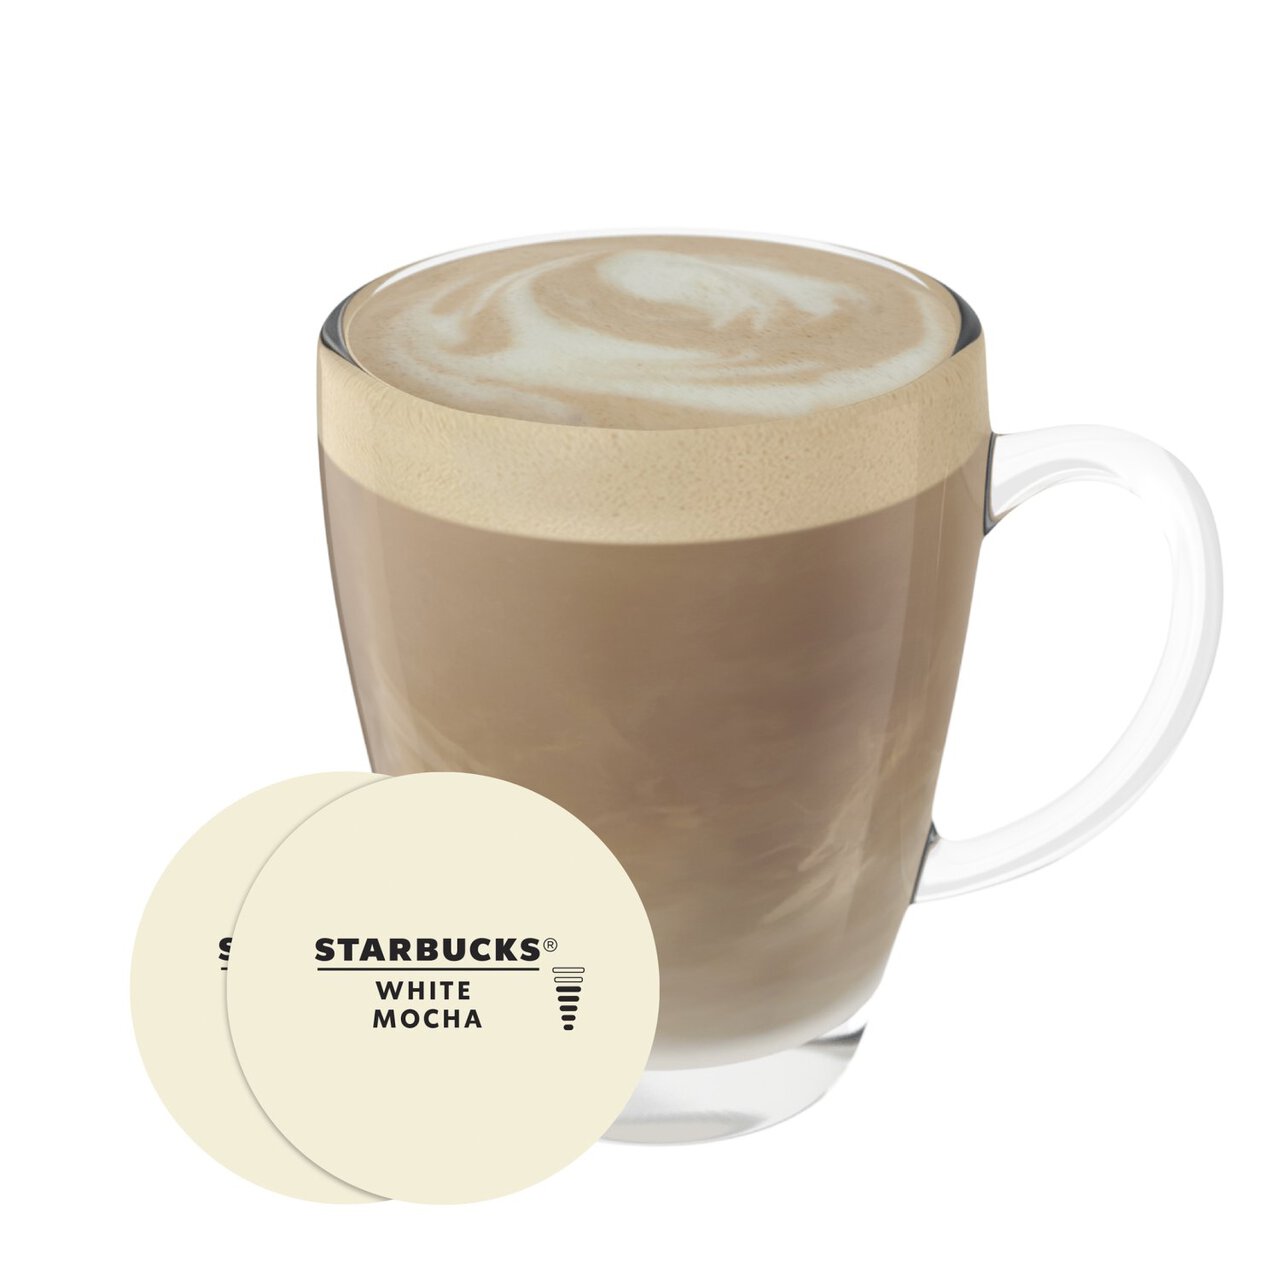 Starbucks by Nescafe Dolce Gusto White Mocha 12 per pack